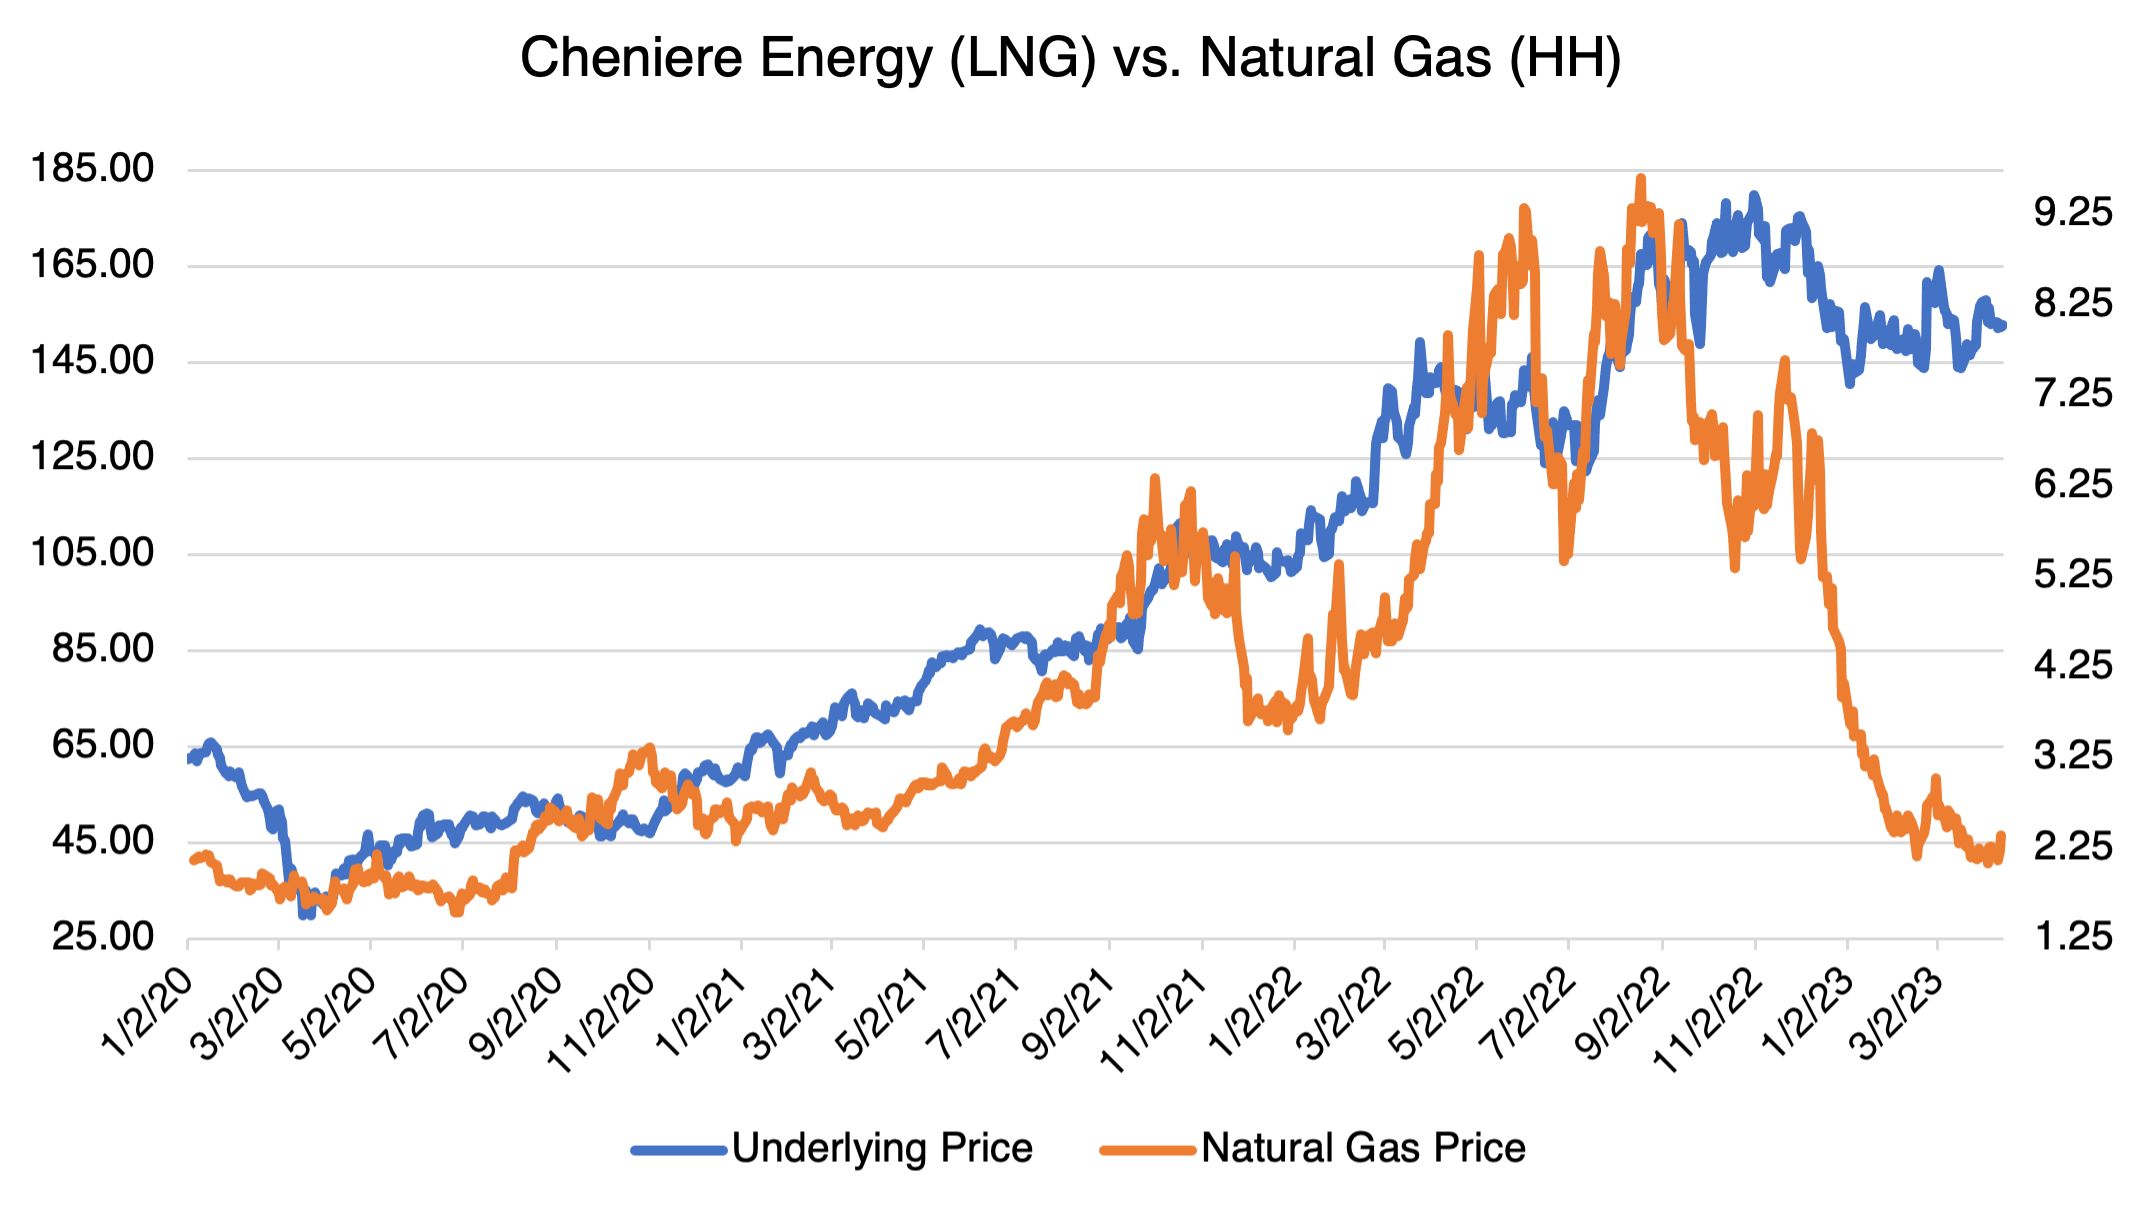 Cheniere Energy (LNG) vs Natural Gas (HH)